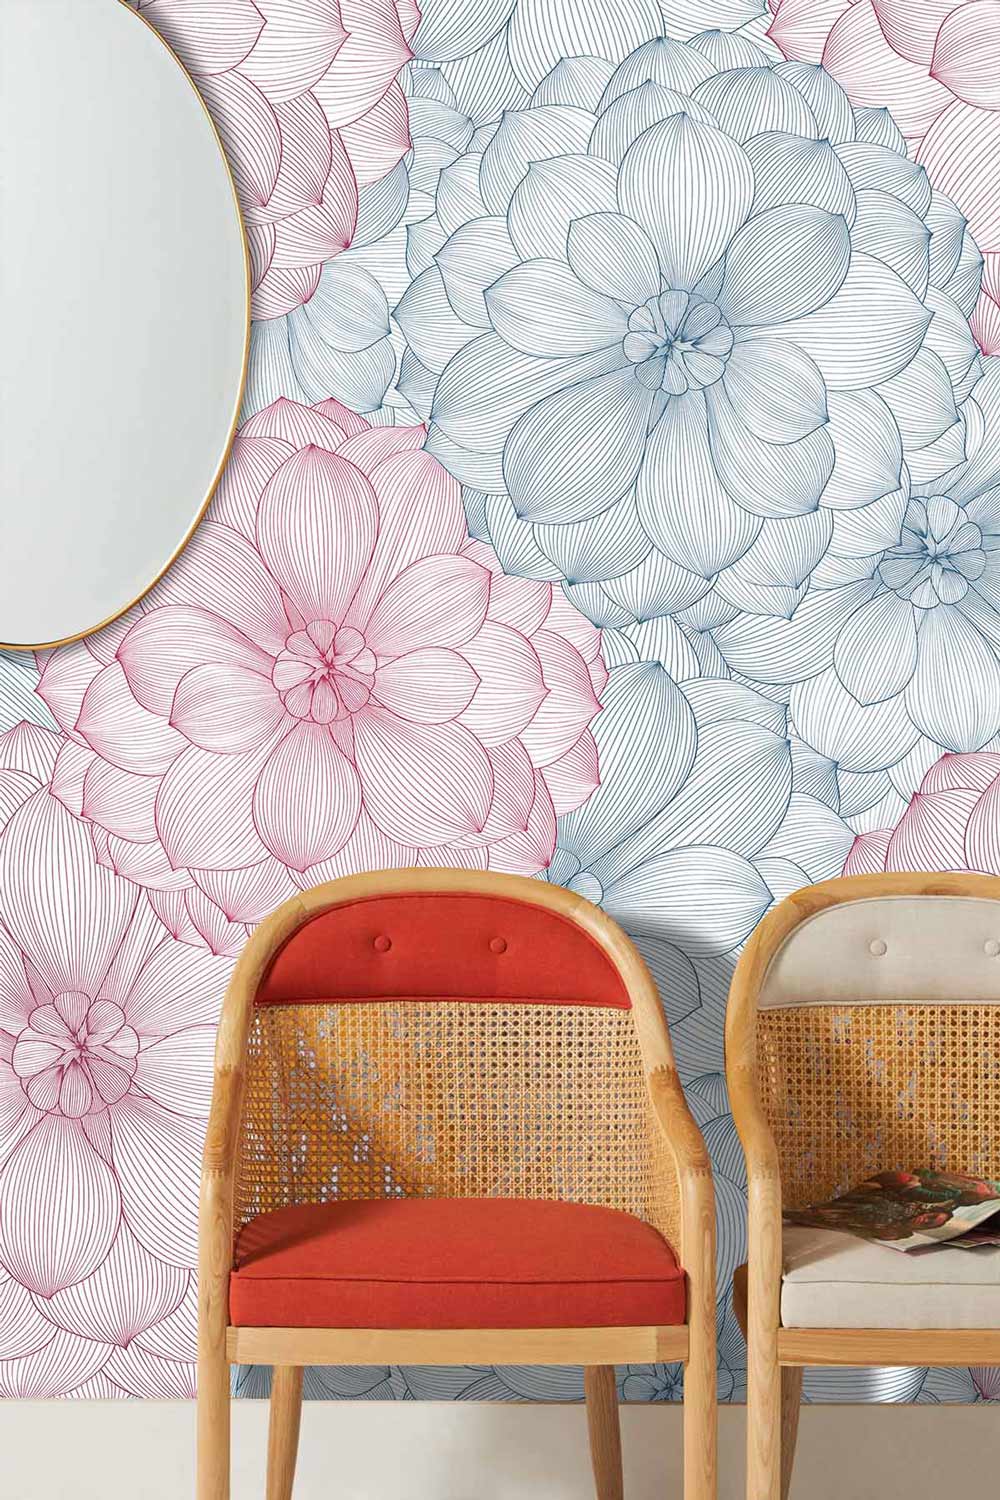 Wallpaper with vintage-inspired vinatge flowers and petal designs